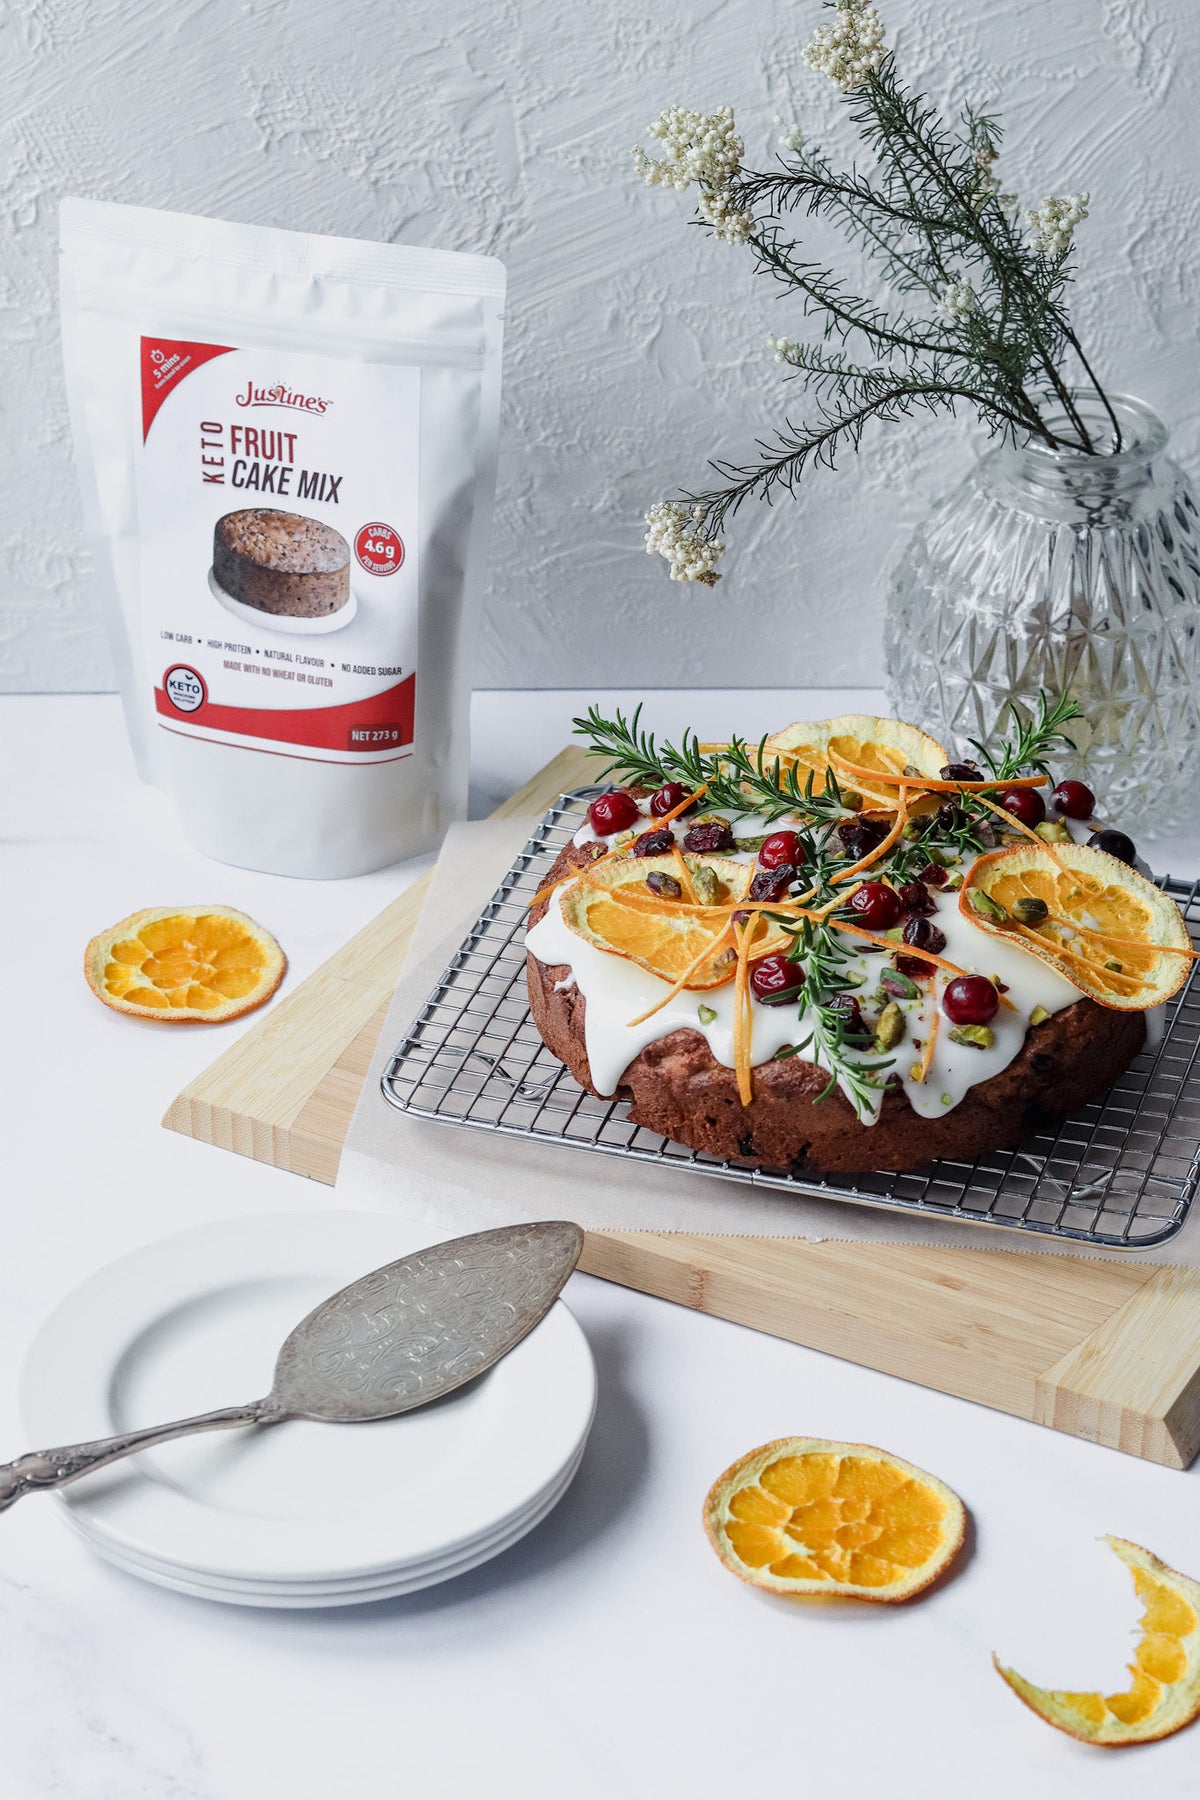 Gluten-free Christmas Cake Recipe - BEST EVER!